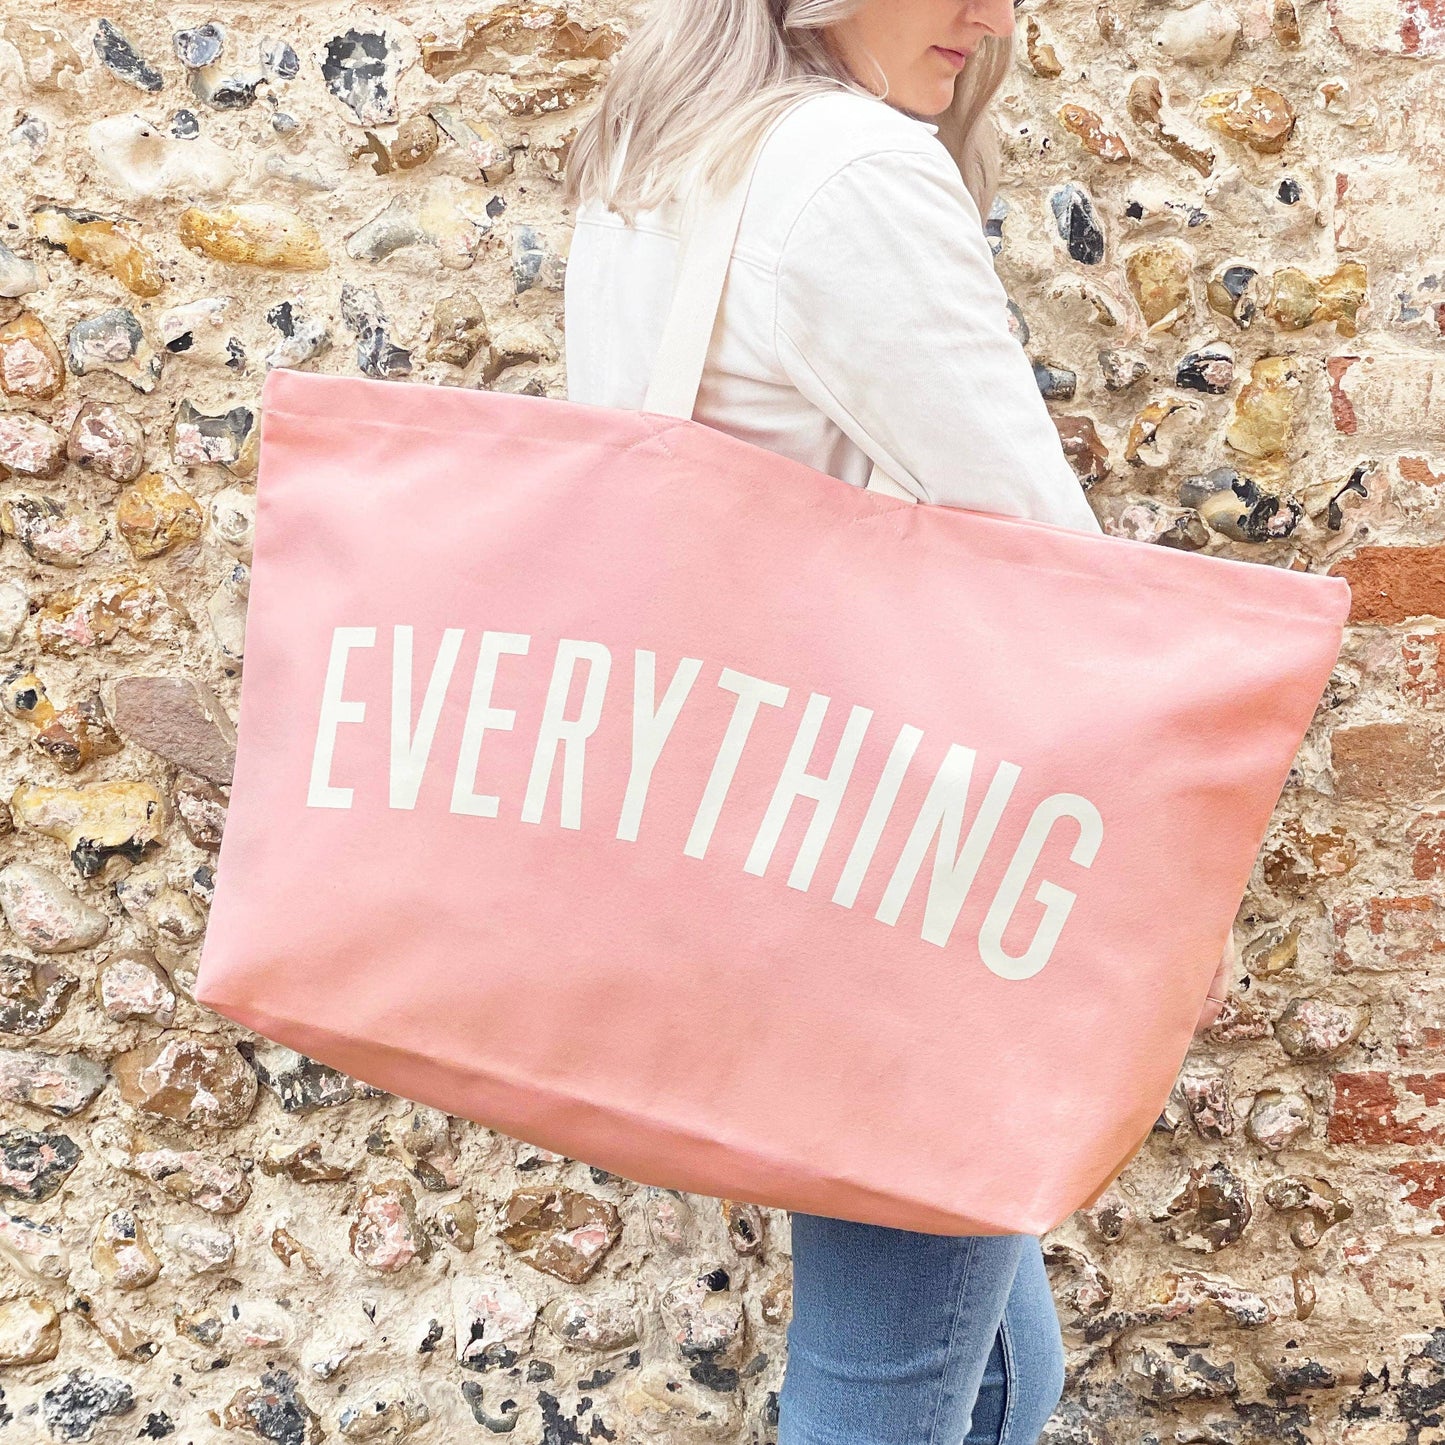 Alphabet Bags - Everything - Pink REALLY Big Bag